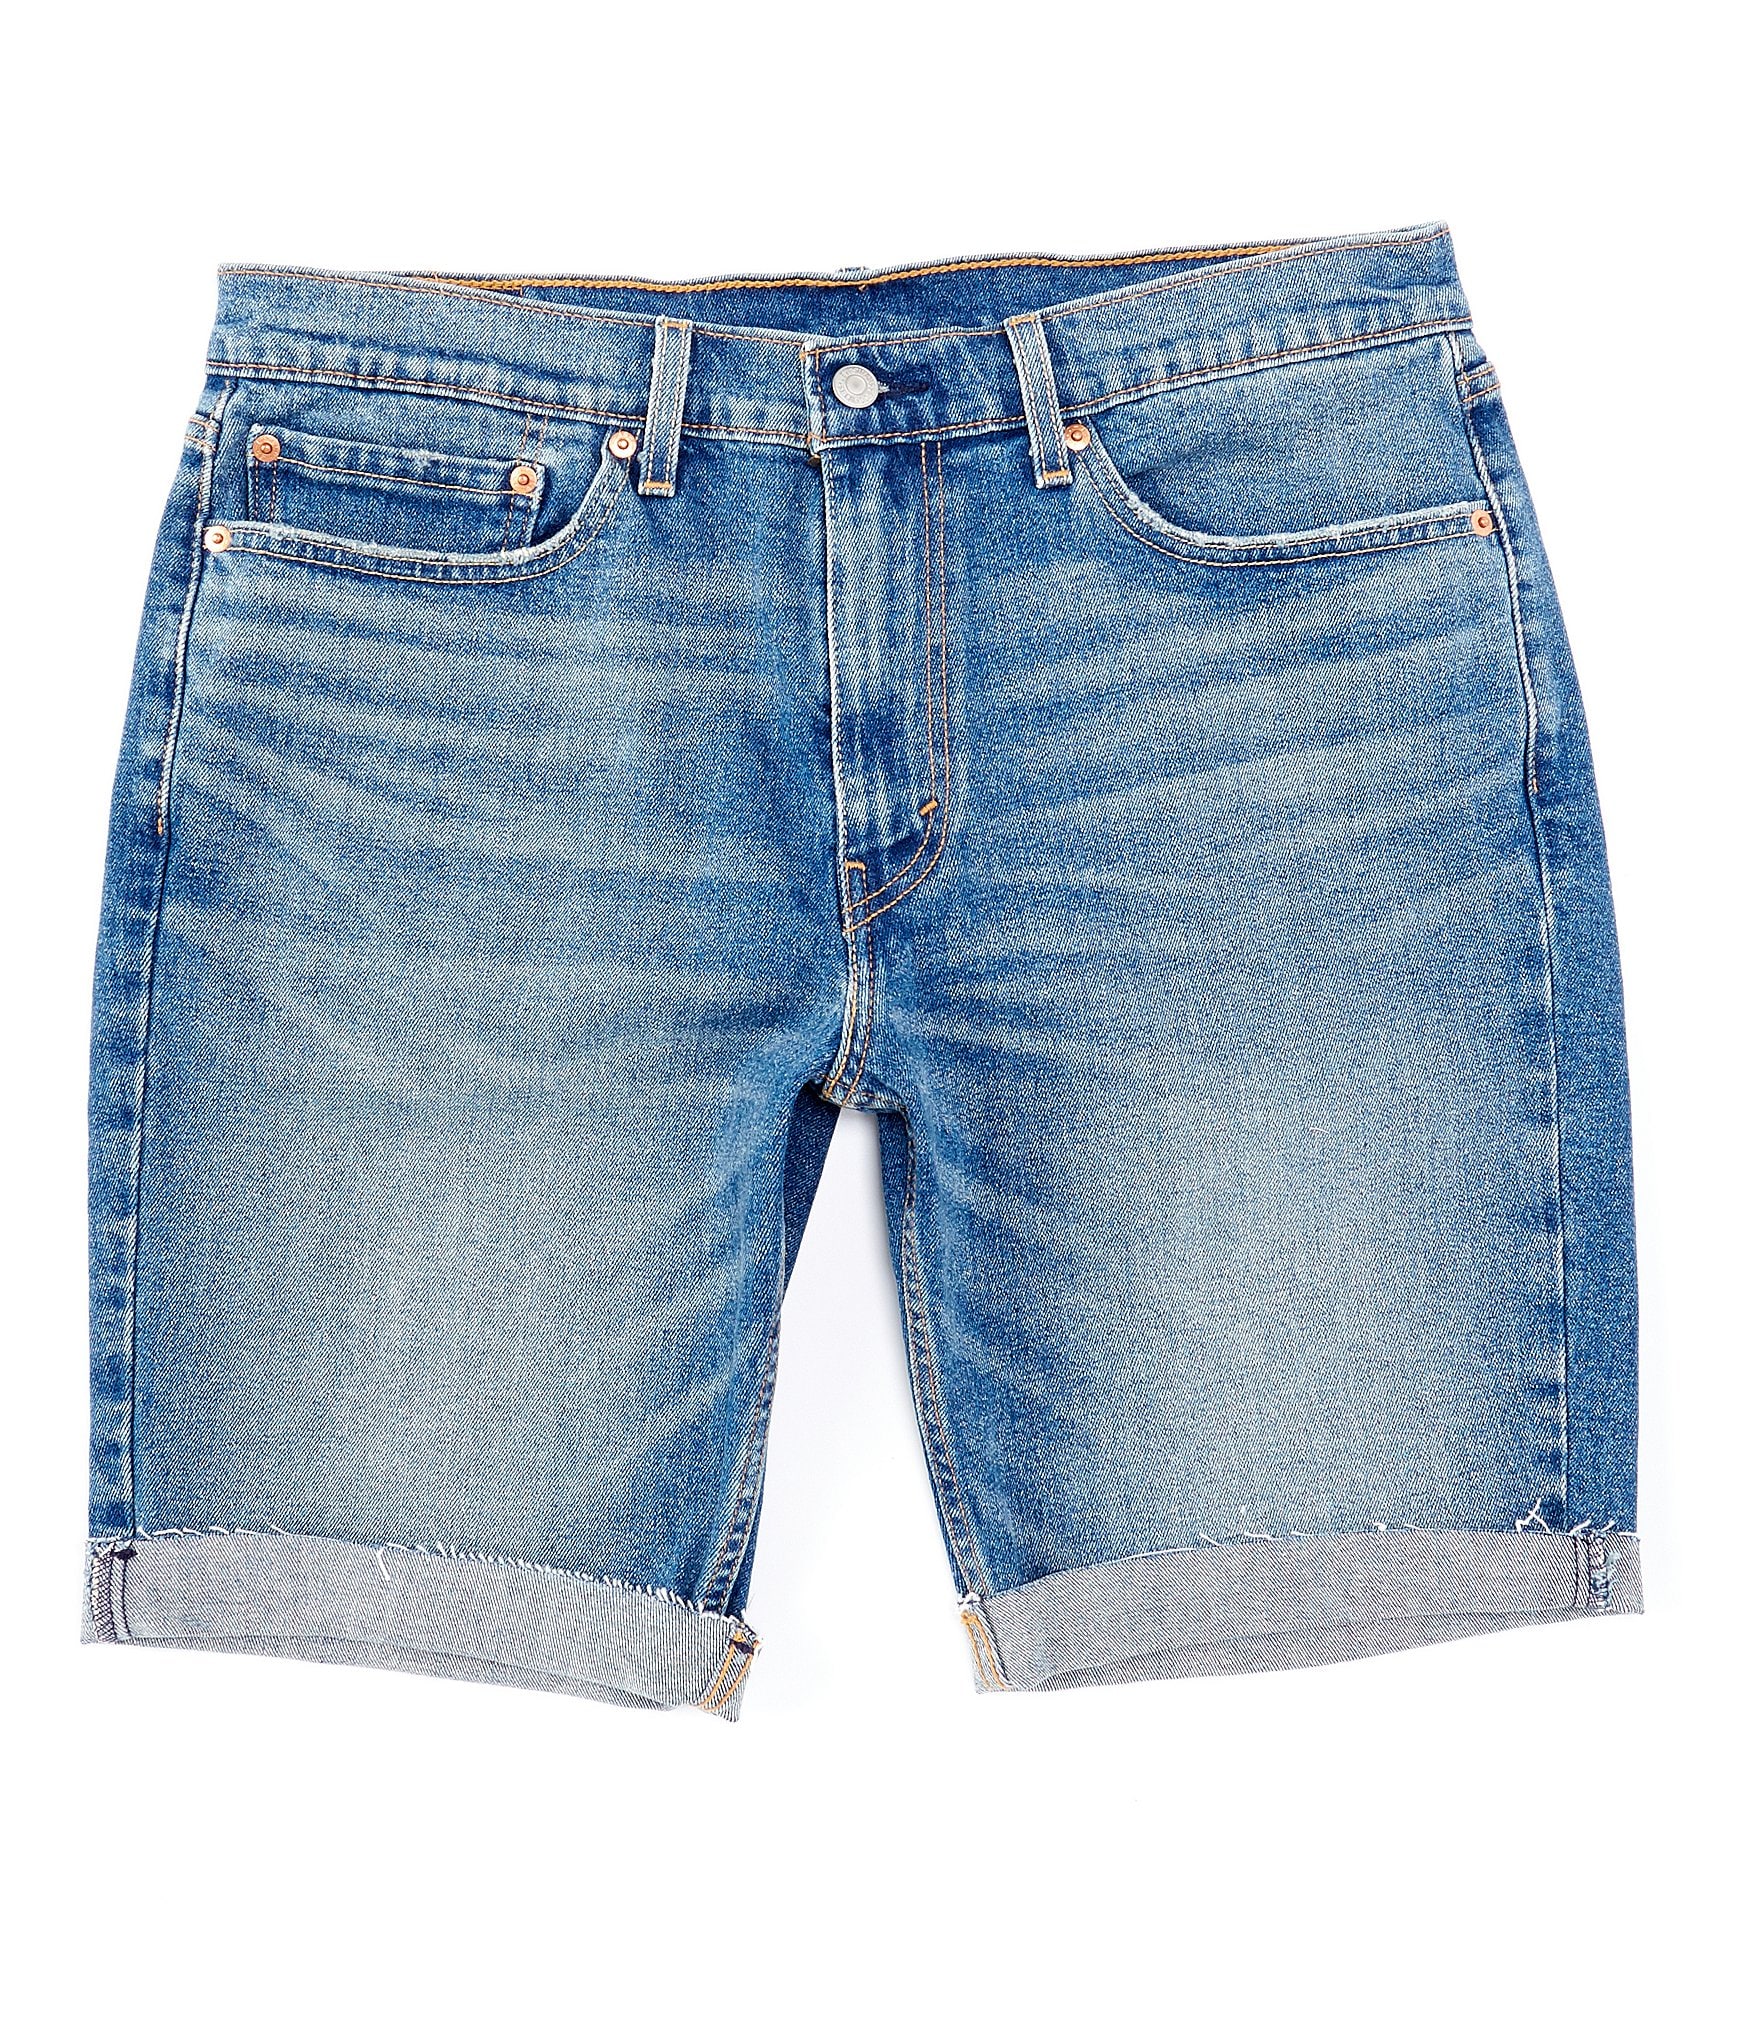 511 jean shorts